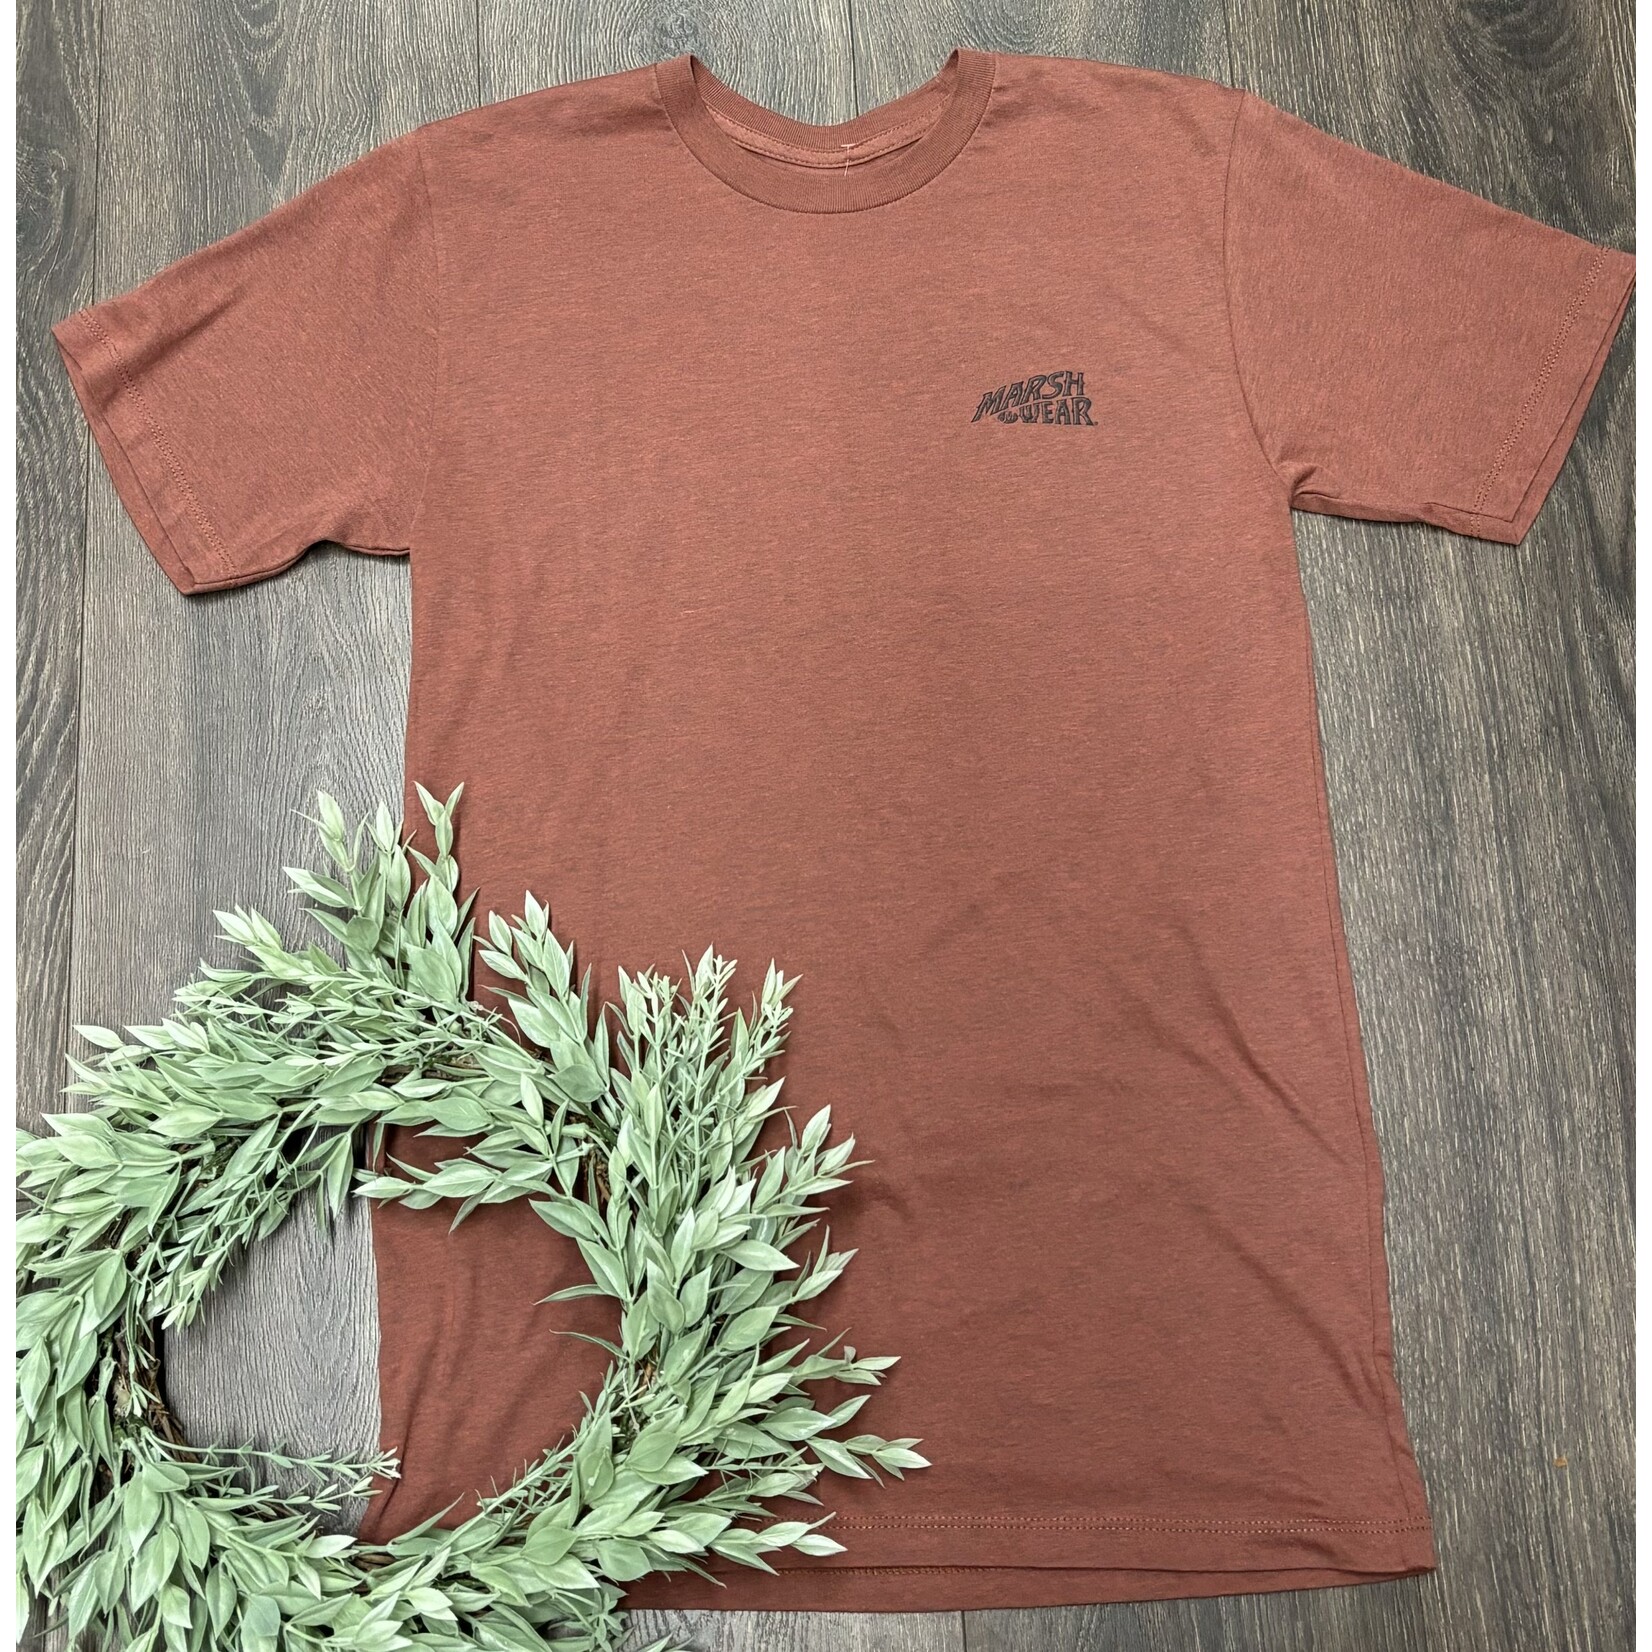 Marsh Wear Marsh Wear Redfish Tail S/S TEE Shirt